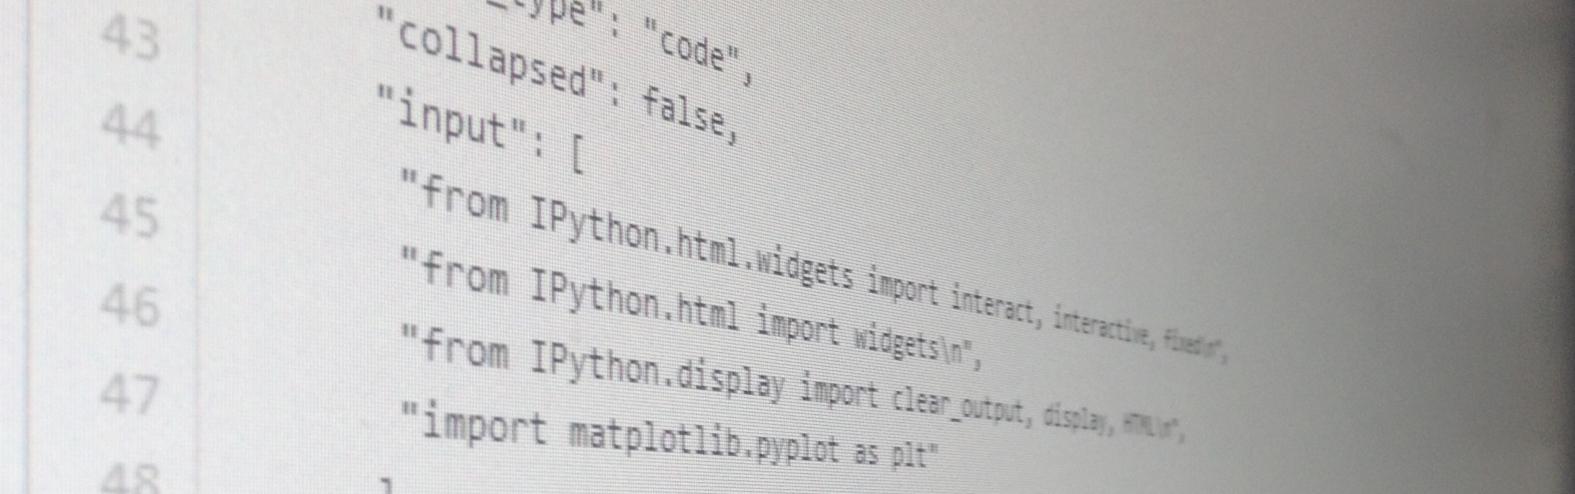 pythoncode.jpg